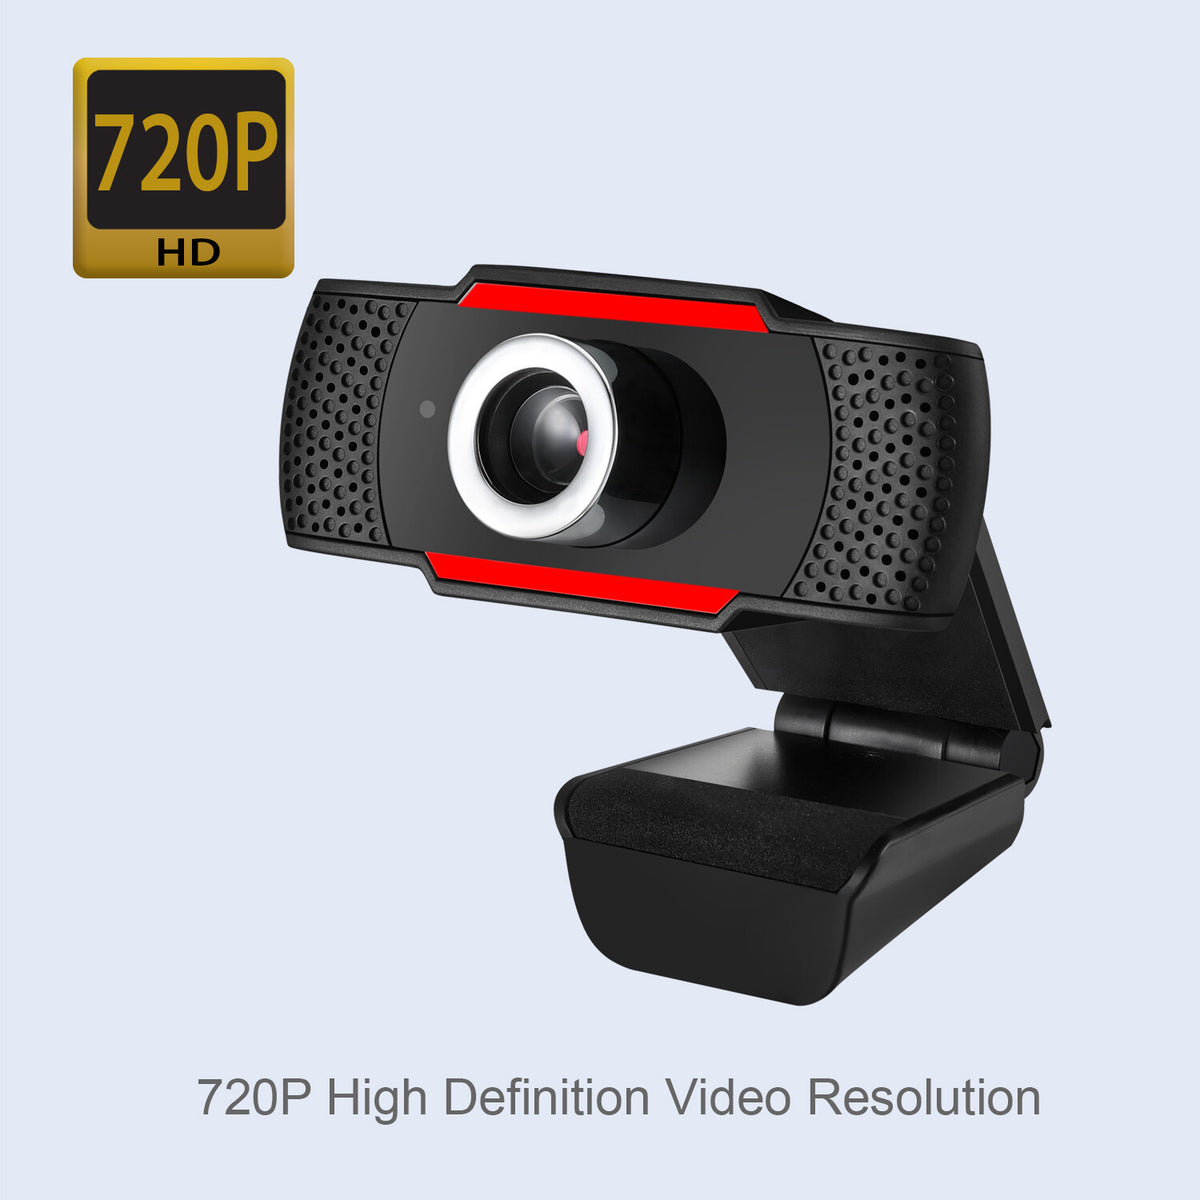 Adesso CyberTrack H3 - 1.3 MP 1280 x 720 pixels USB 2.0 webcam